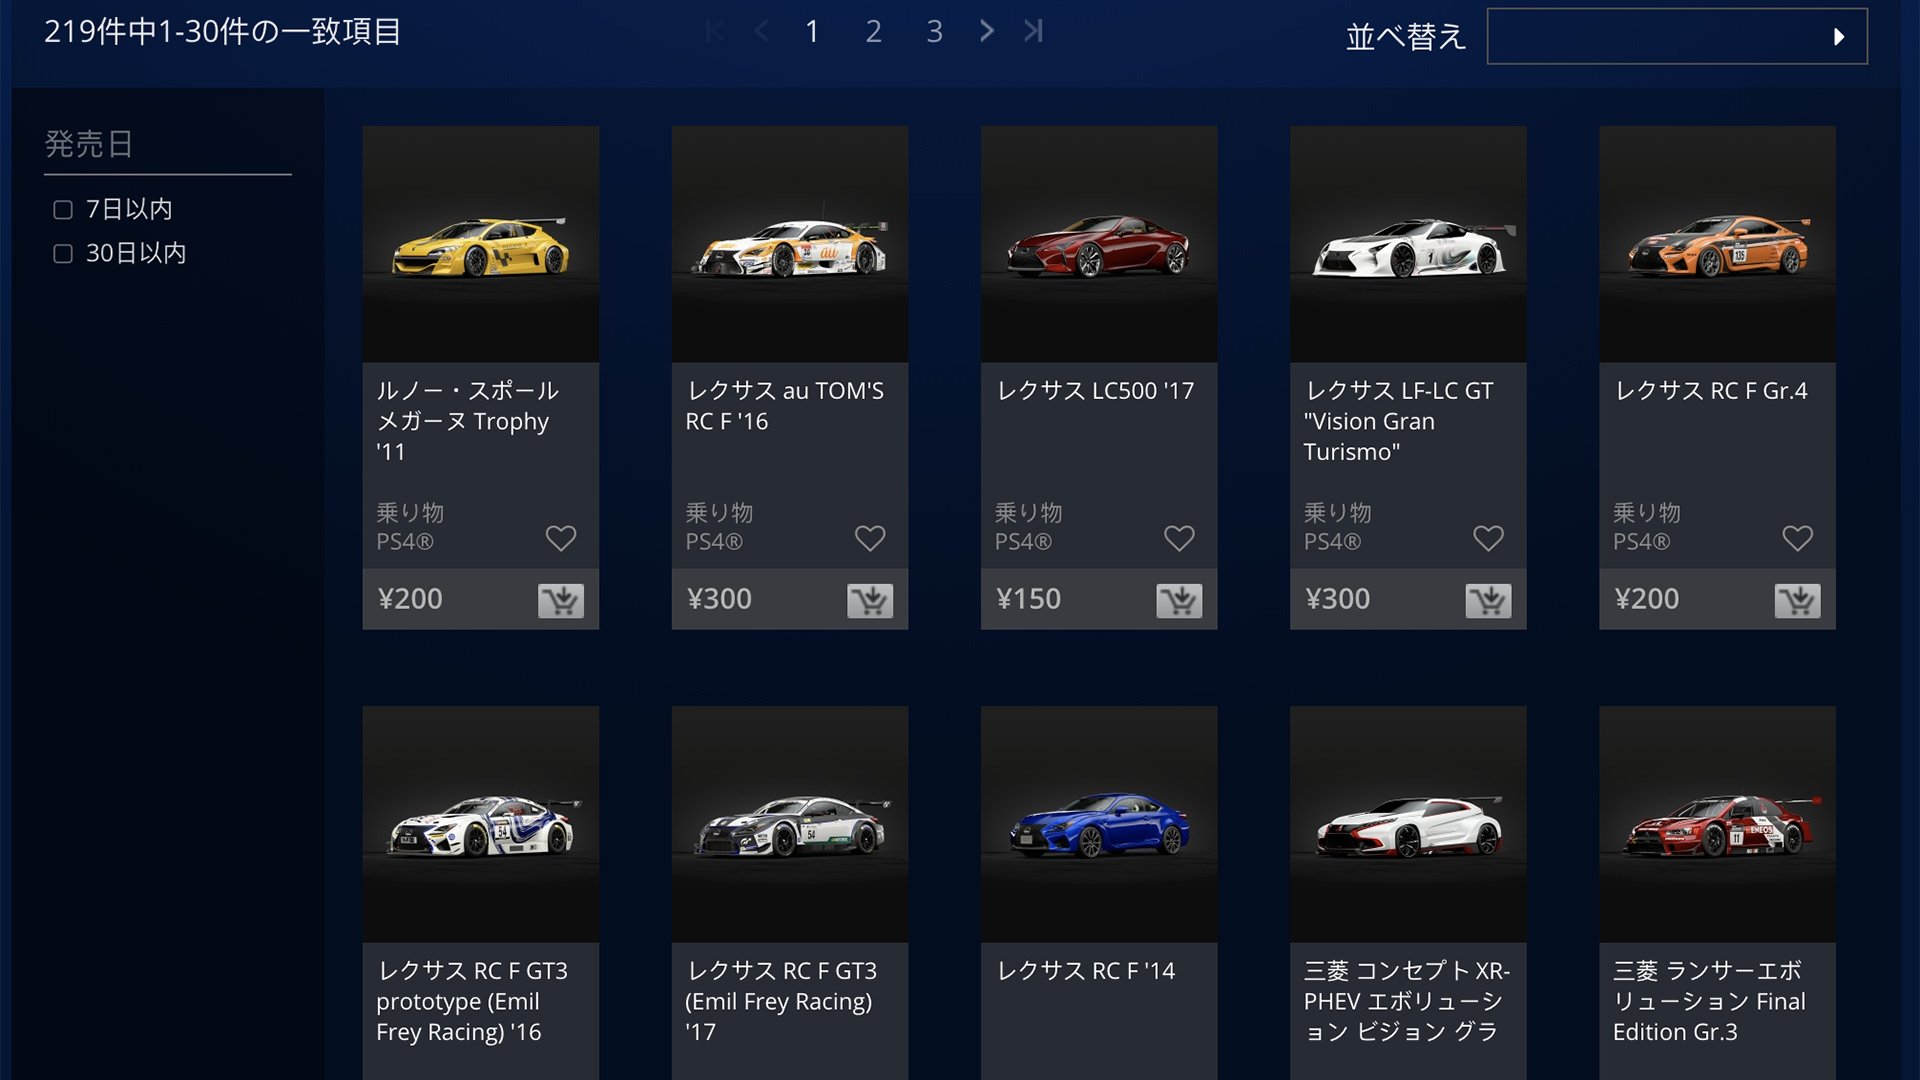 Gran Turismo Sport Update Adds F1 Car, Microtransactions - IGN